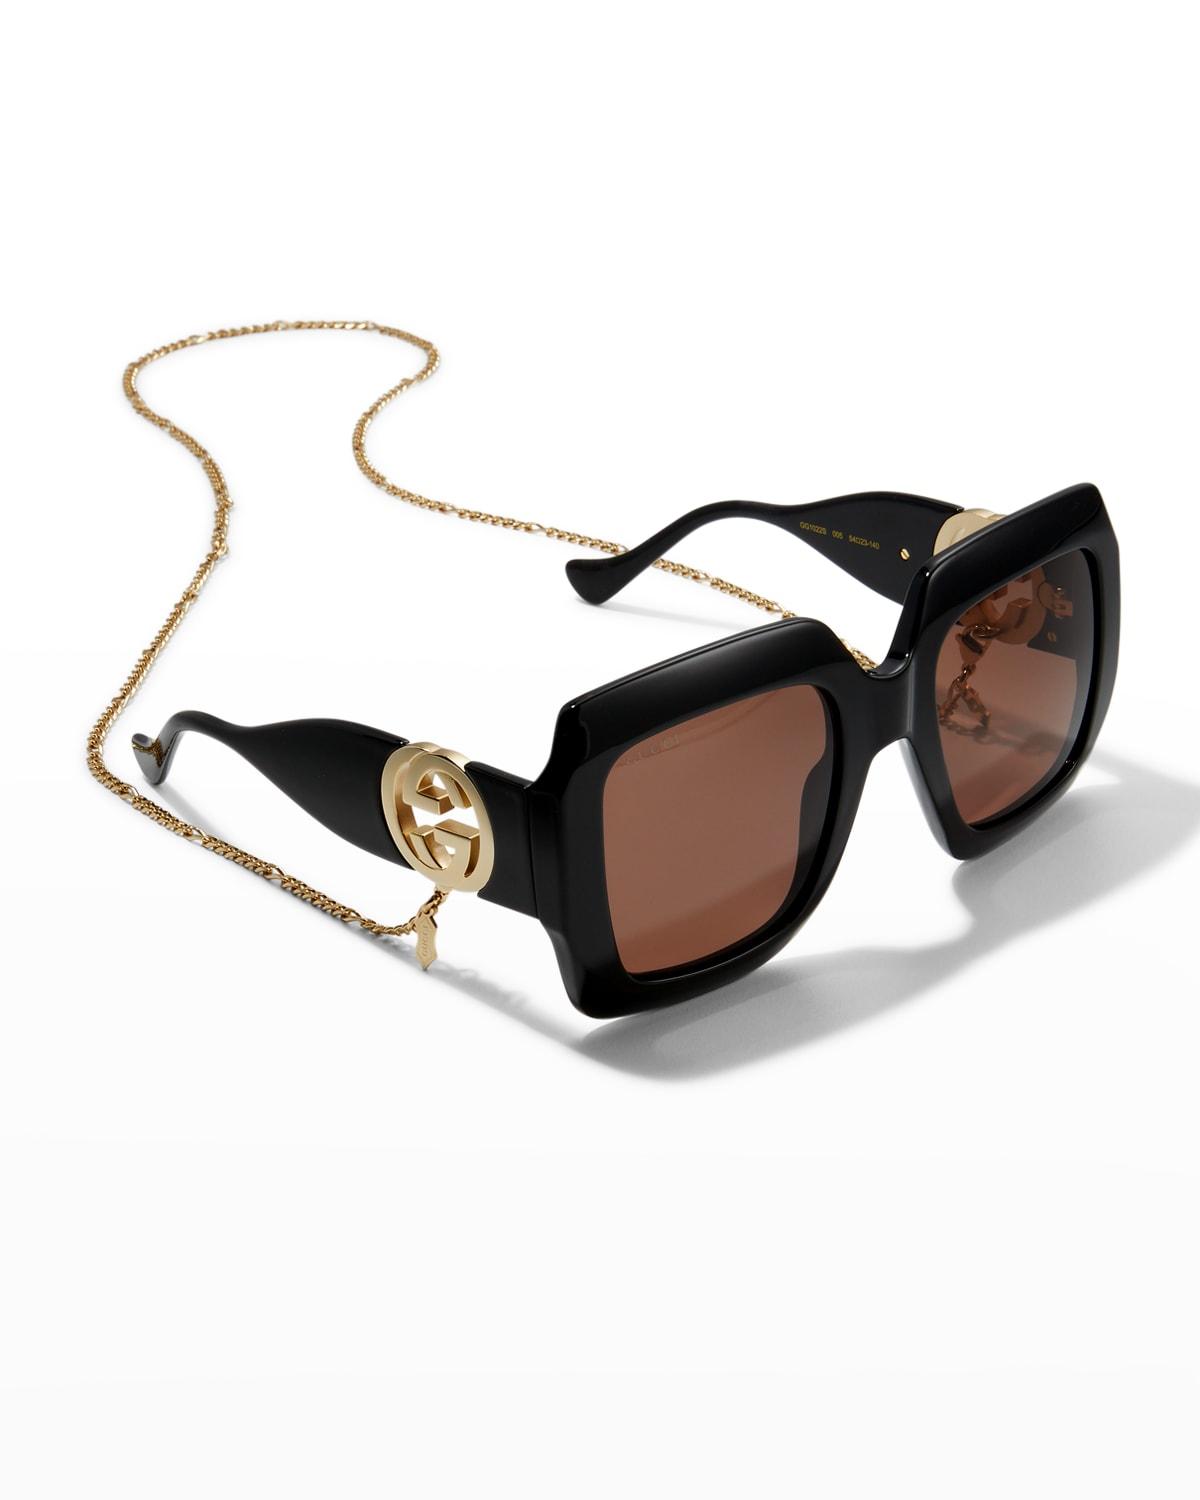 Oversized rectangular sunglasses in dark brown injection